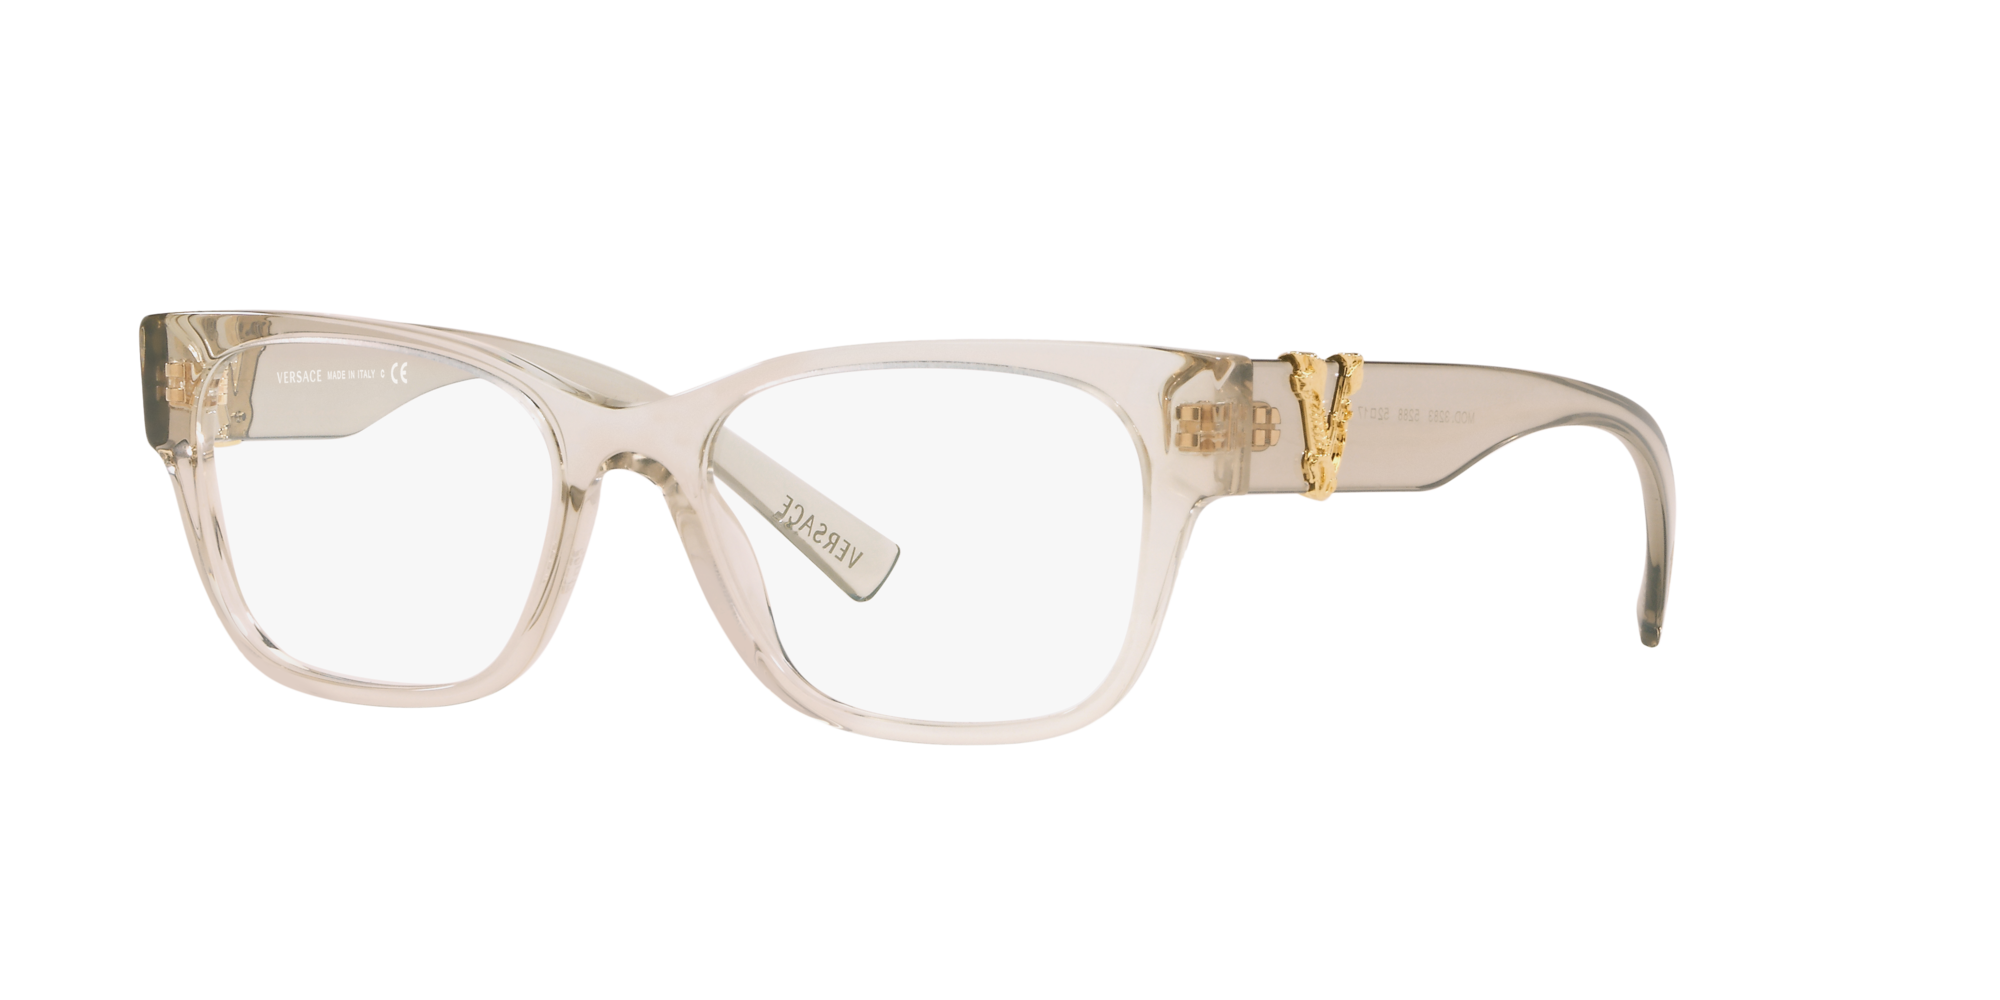 opsm versace sunglasses